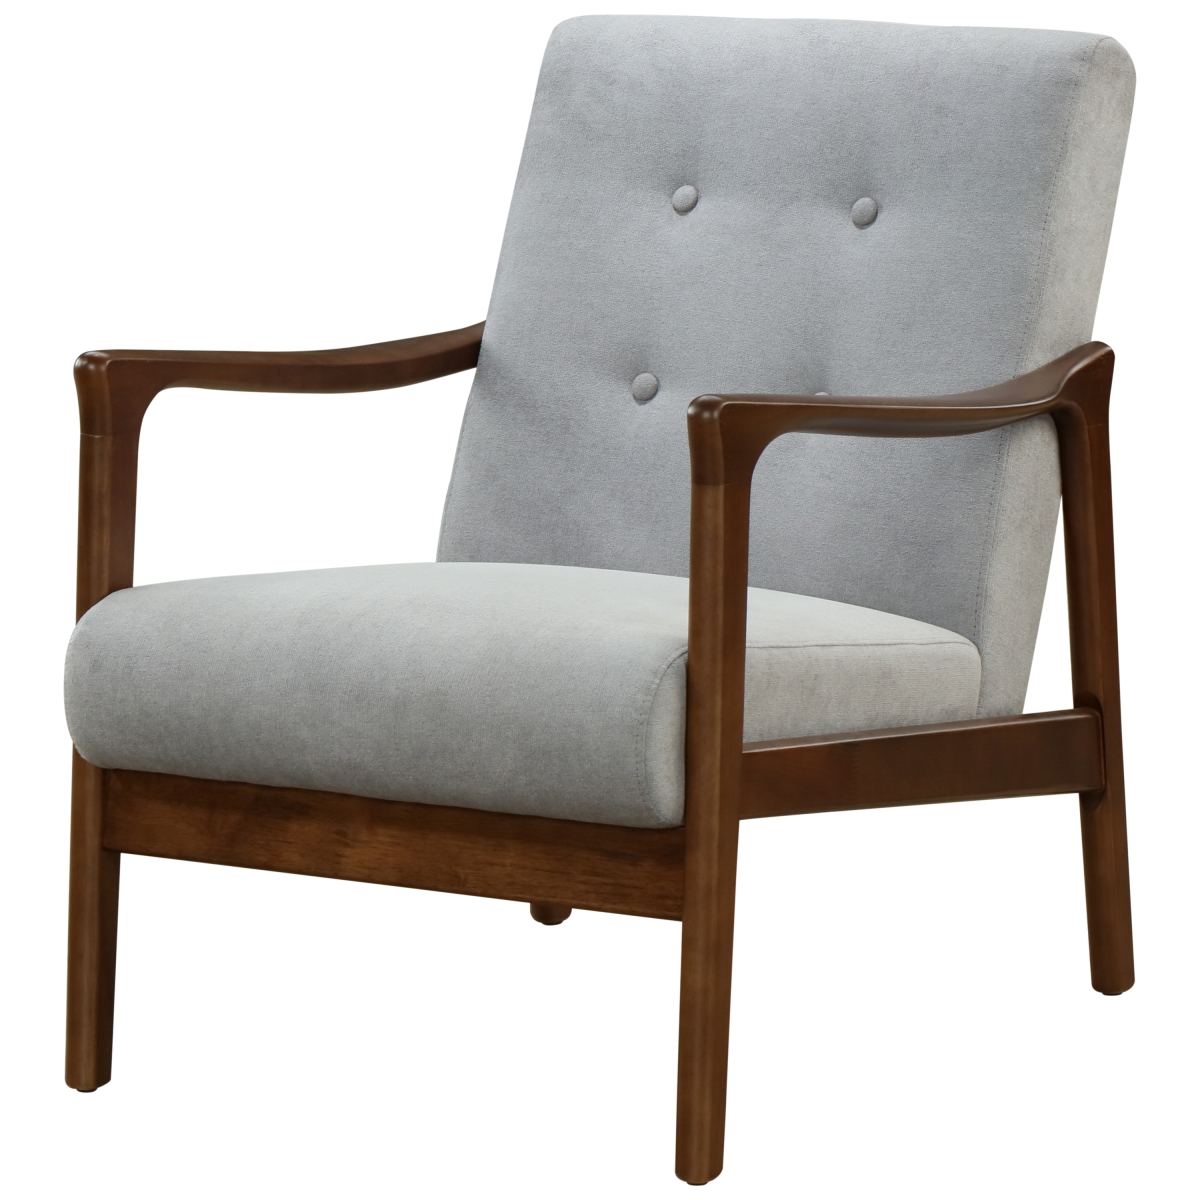 1320003-501 31 X 25.50 X 30.50 In. Nicholas Arm Chair, Studio Gray